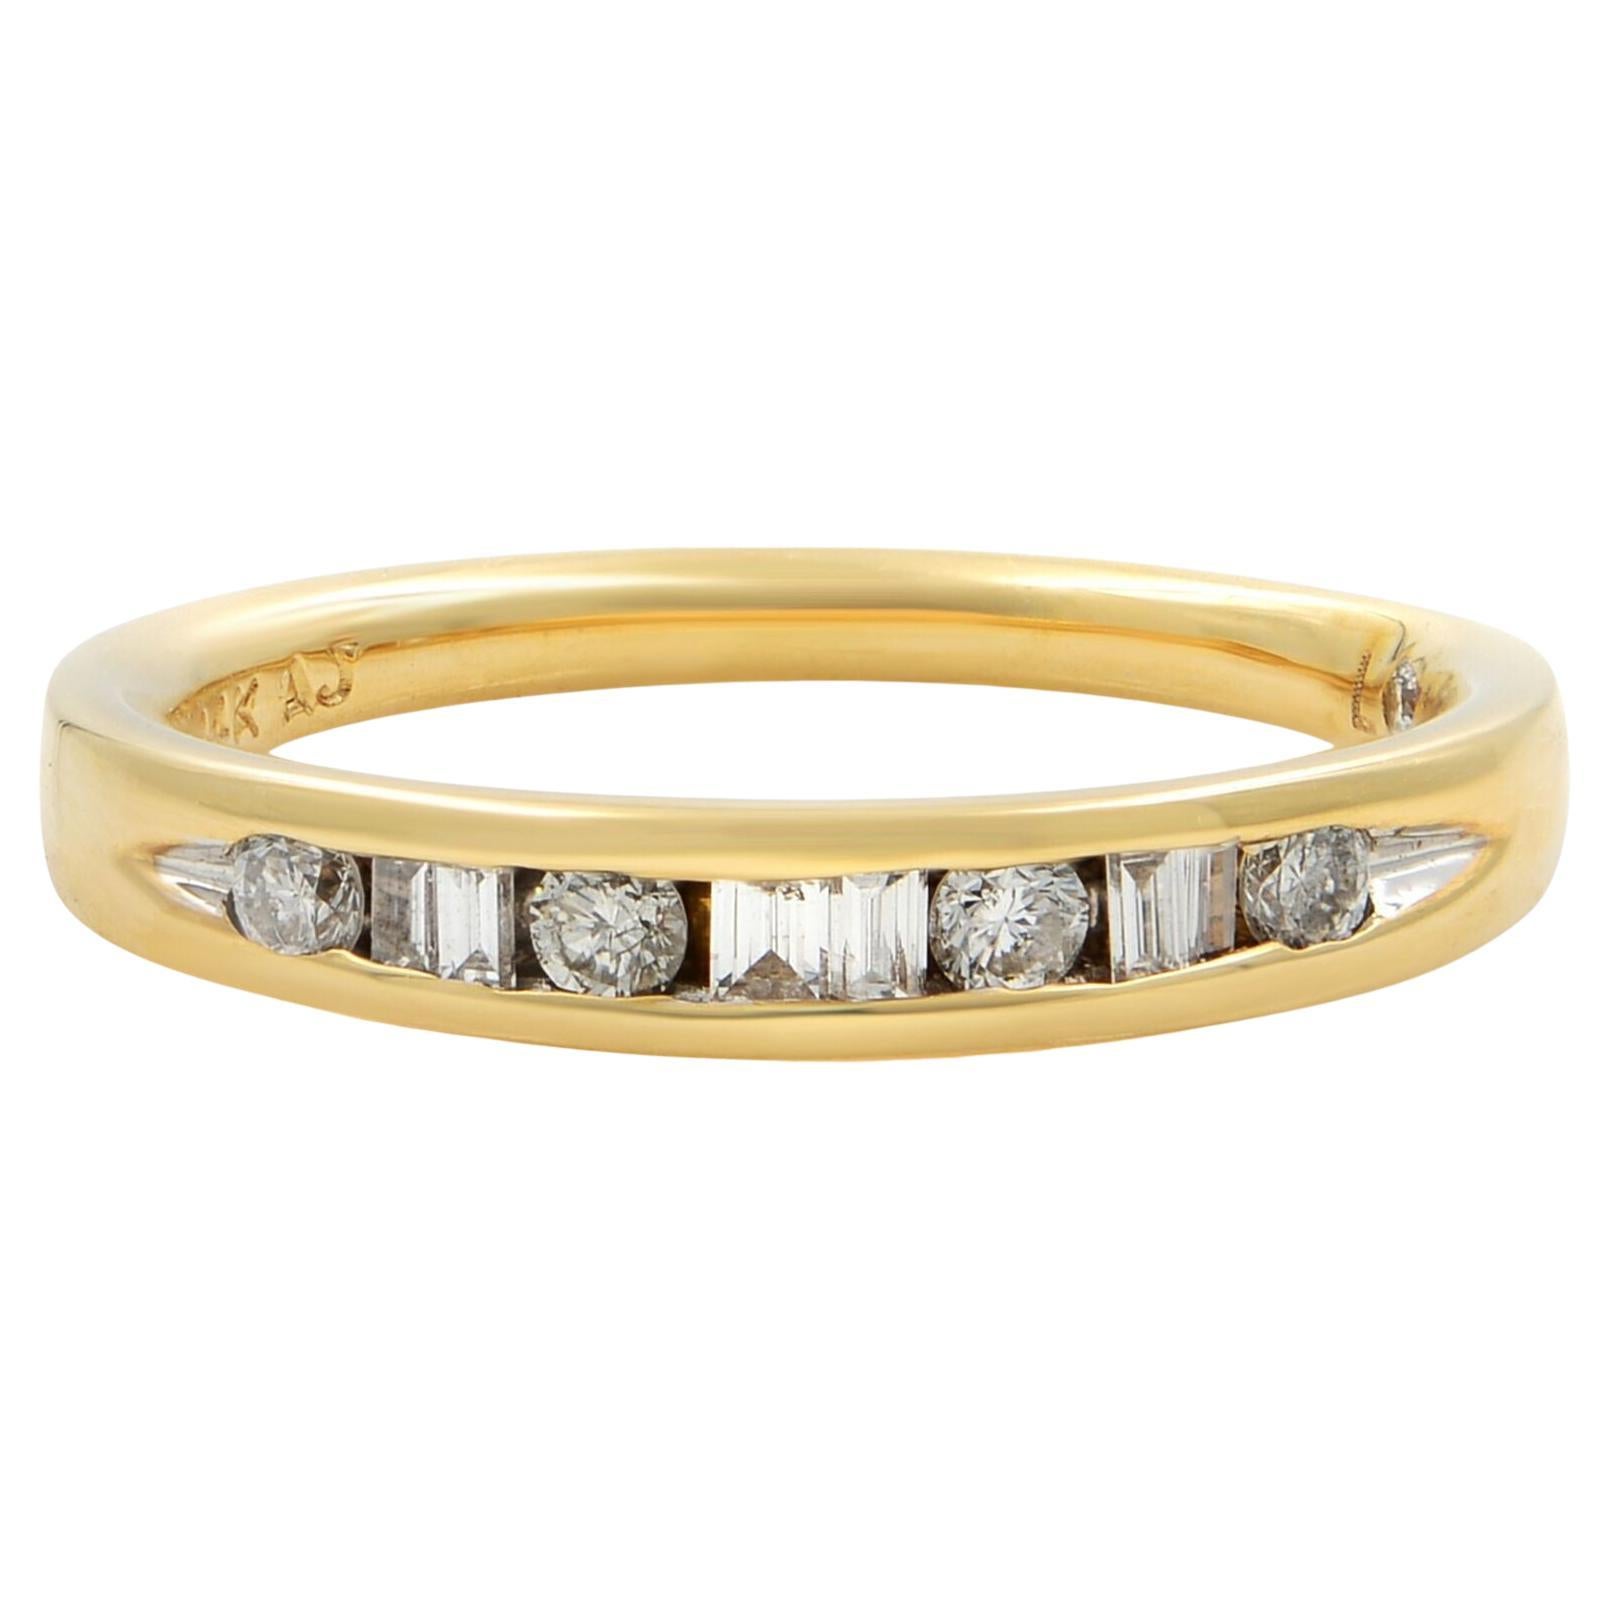 Rachel Koen Diamond Ladies Wedding Band 14K Yellow Gold 0.25 Cttw Size 7 For Sale